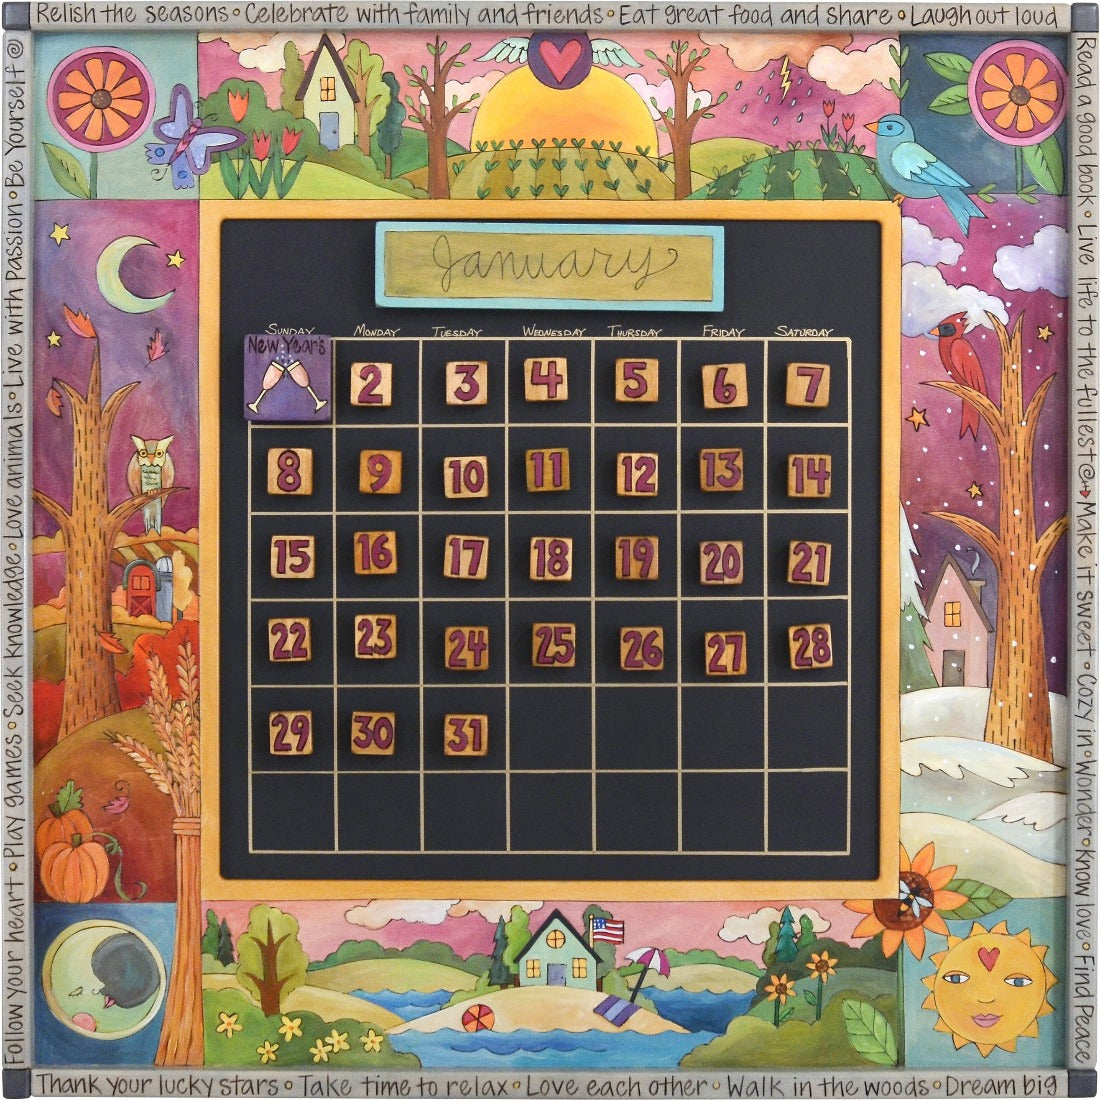 Perpetual Calendar, Large-Relish the Seasons